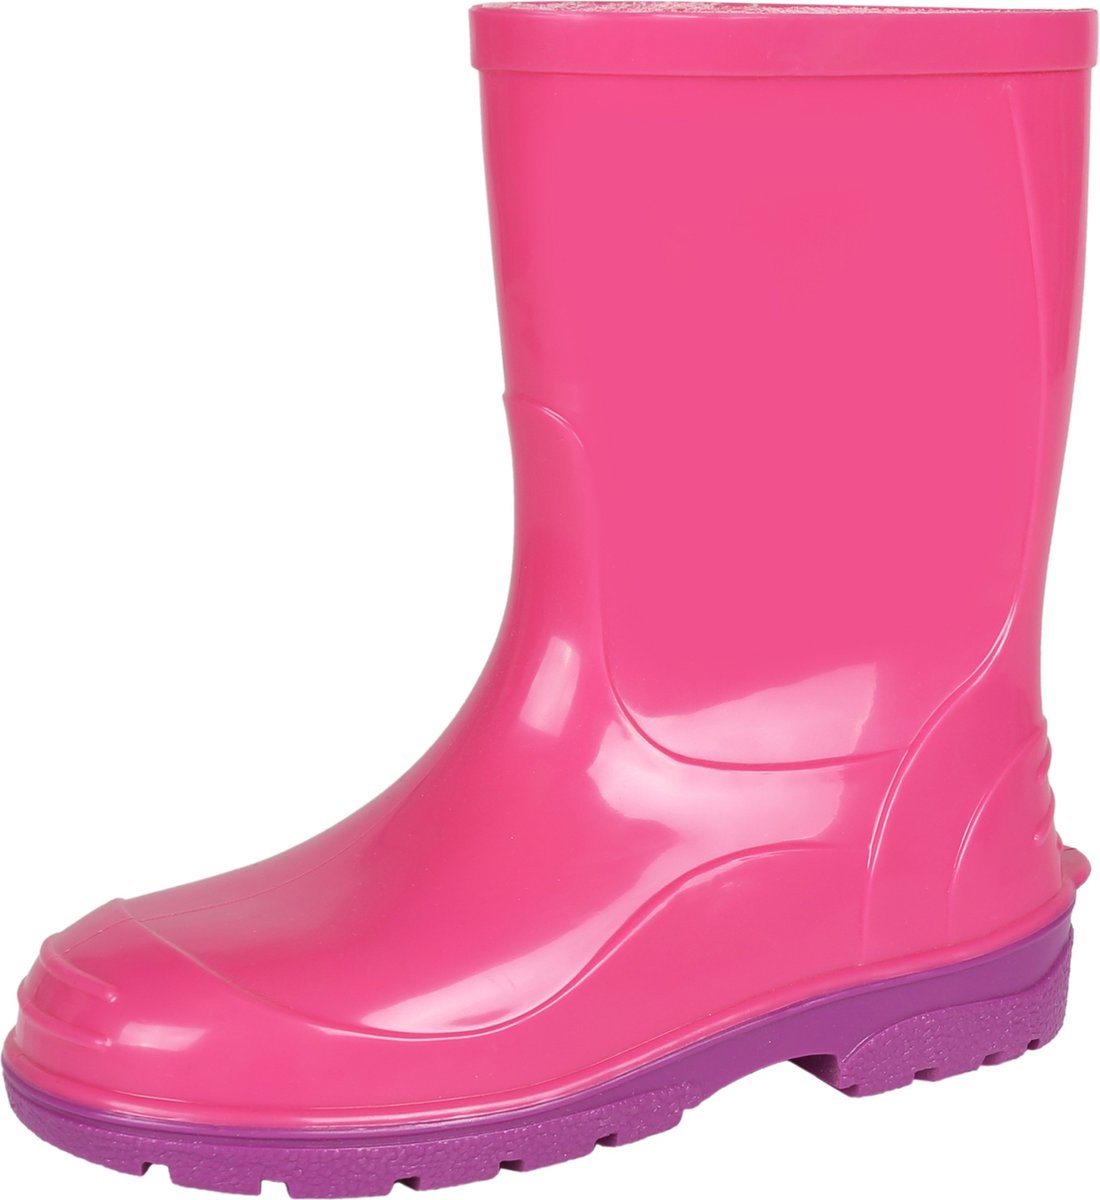 Roze laarzen met paarse zool - Ola LEMIGO / 33